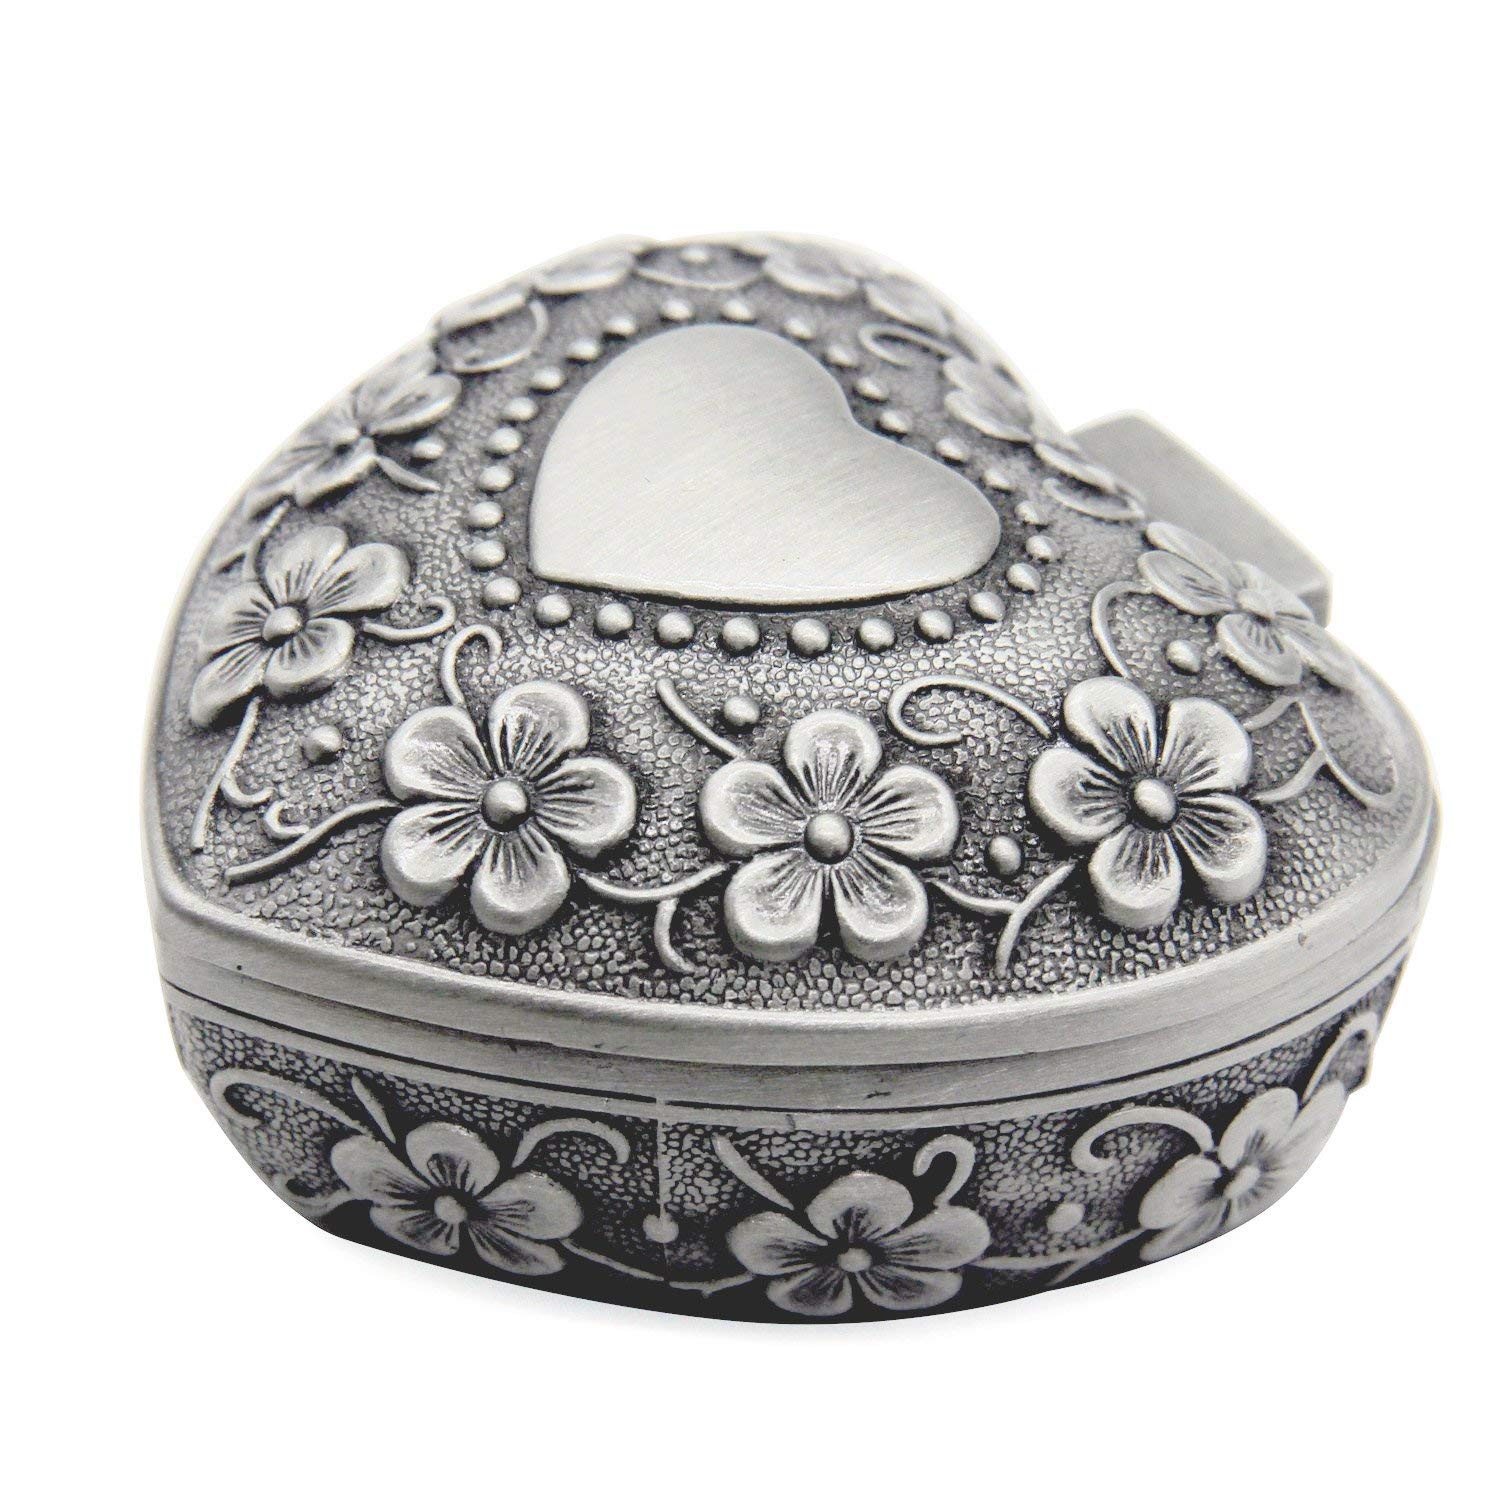 Classic Vintage Silver Heart Shape Keepsake Jewel Box Ring Small Trinket Storage Organizer Chest Christmas Gift,Silver